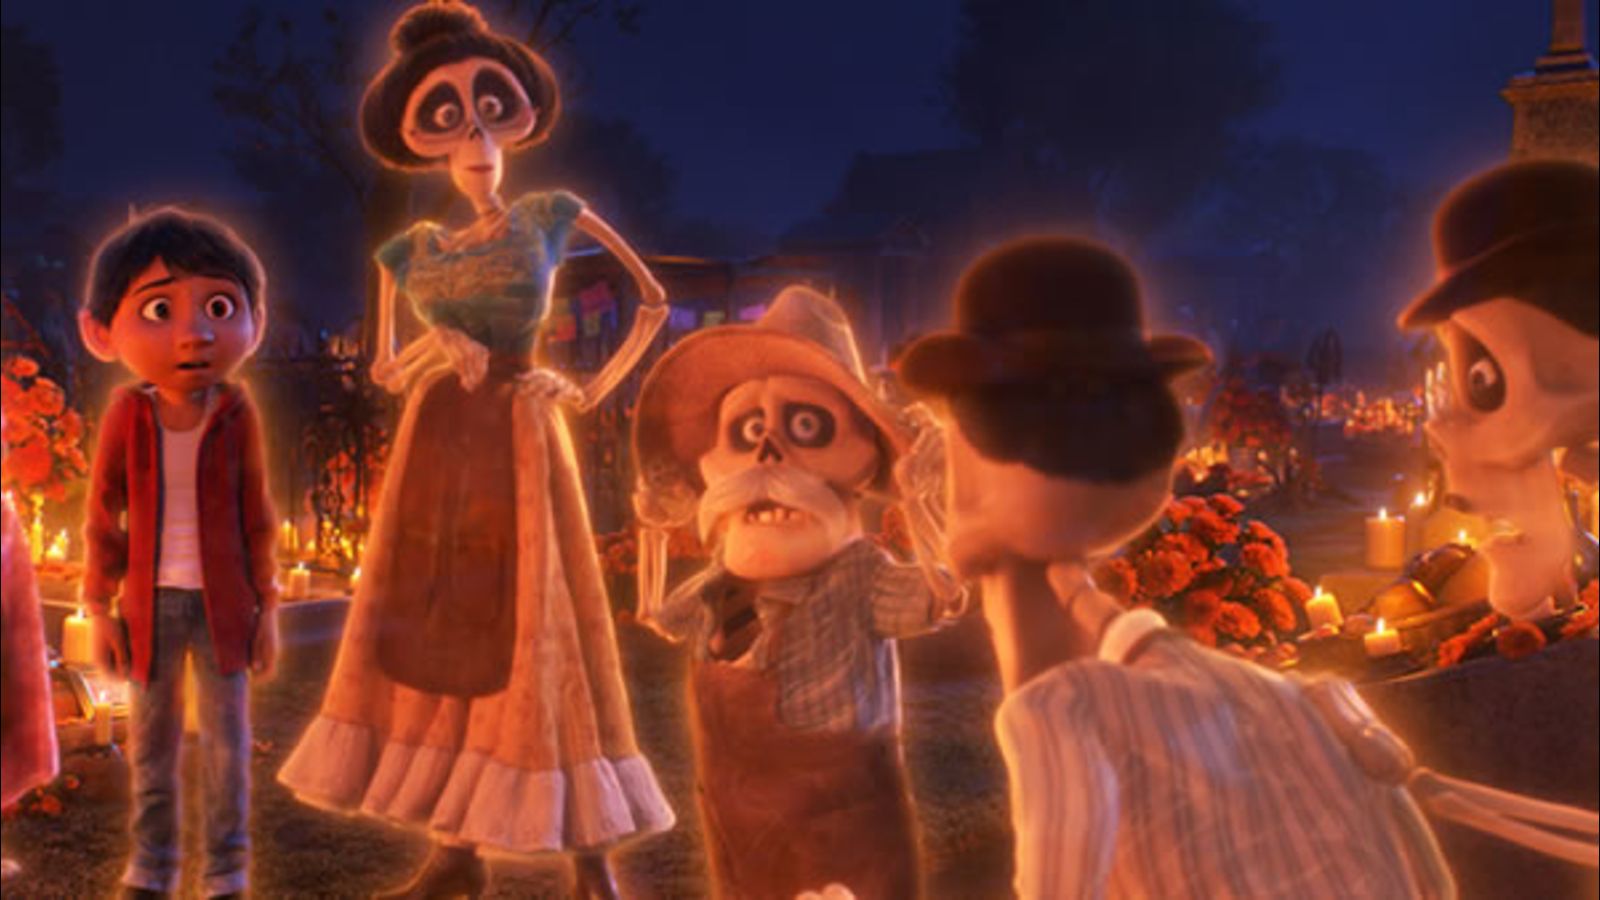 Marigolds, Papel Picado And Alebrijes: The Visual Language Of The New Disney Pixar Film 'Coco' Los Angeles